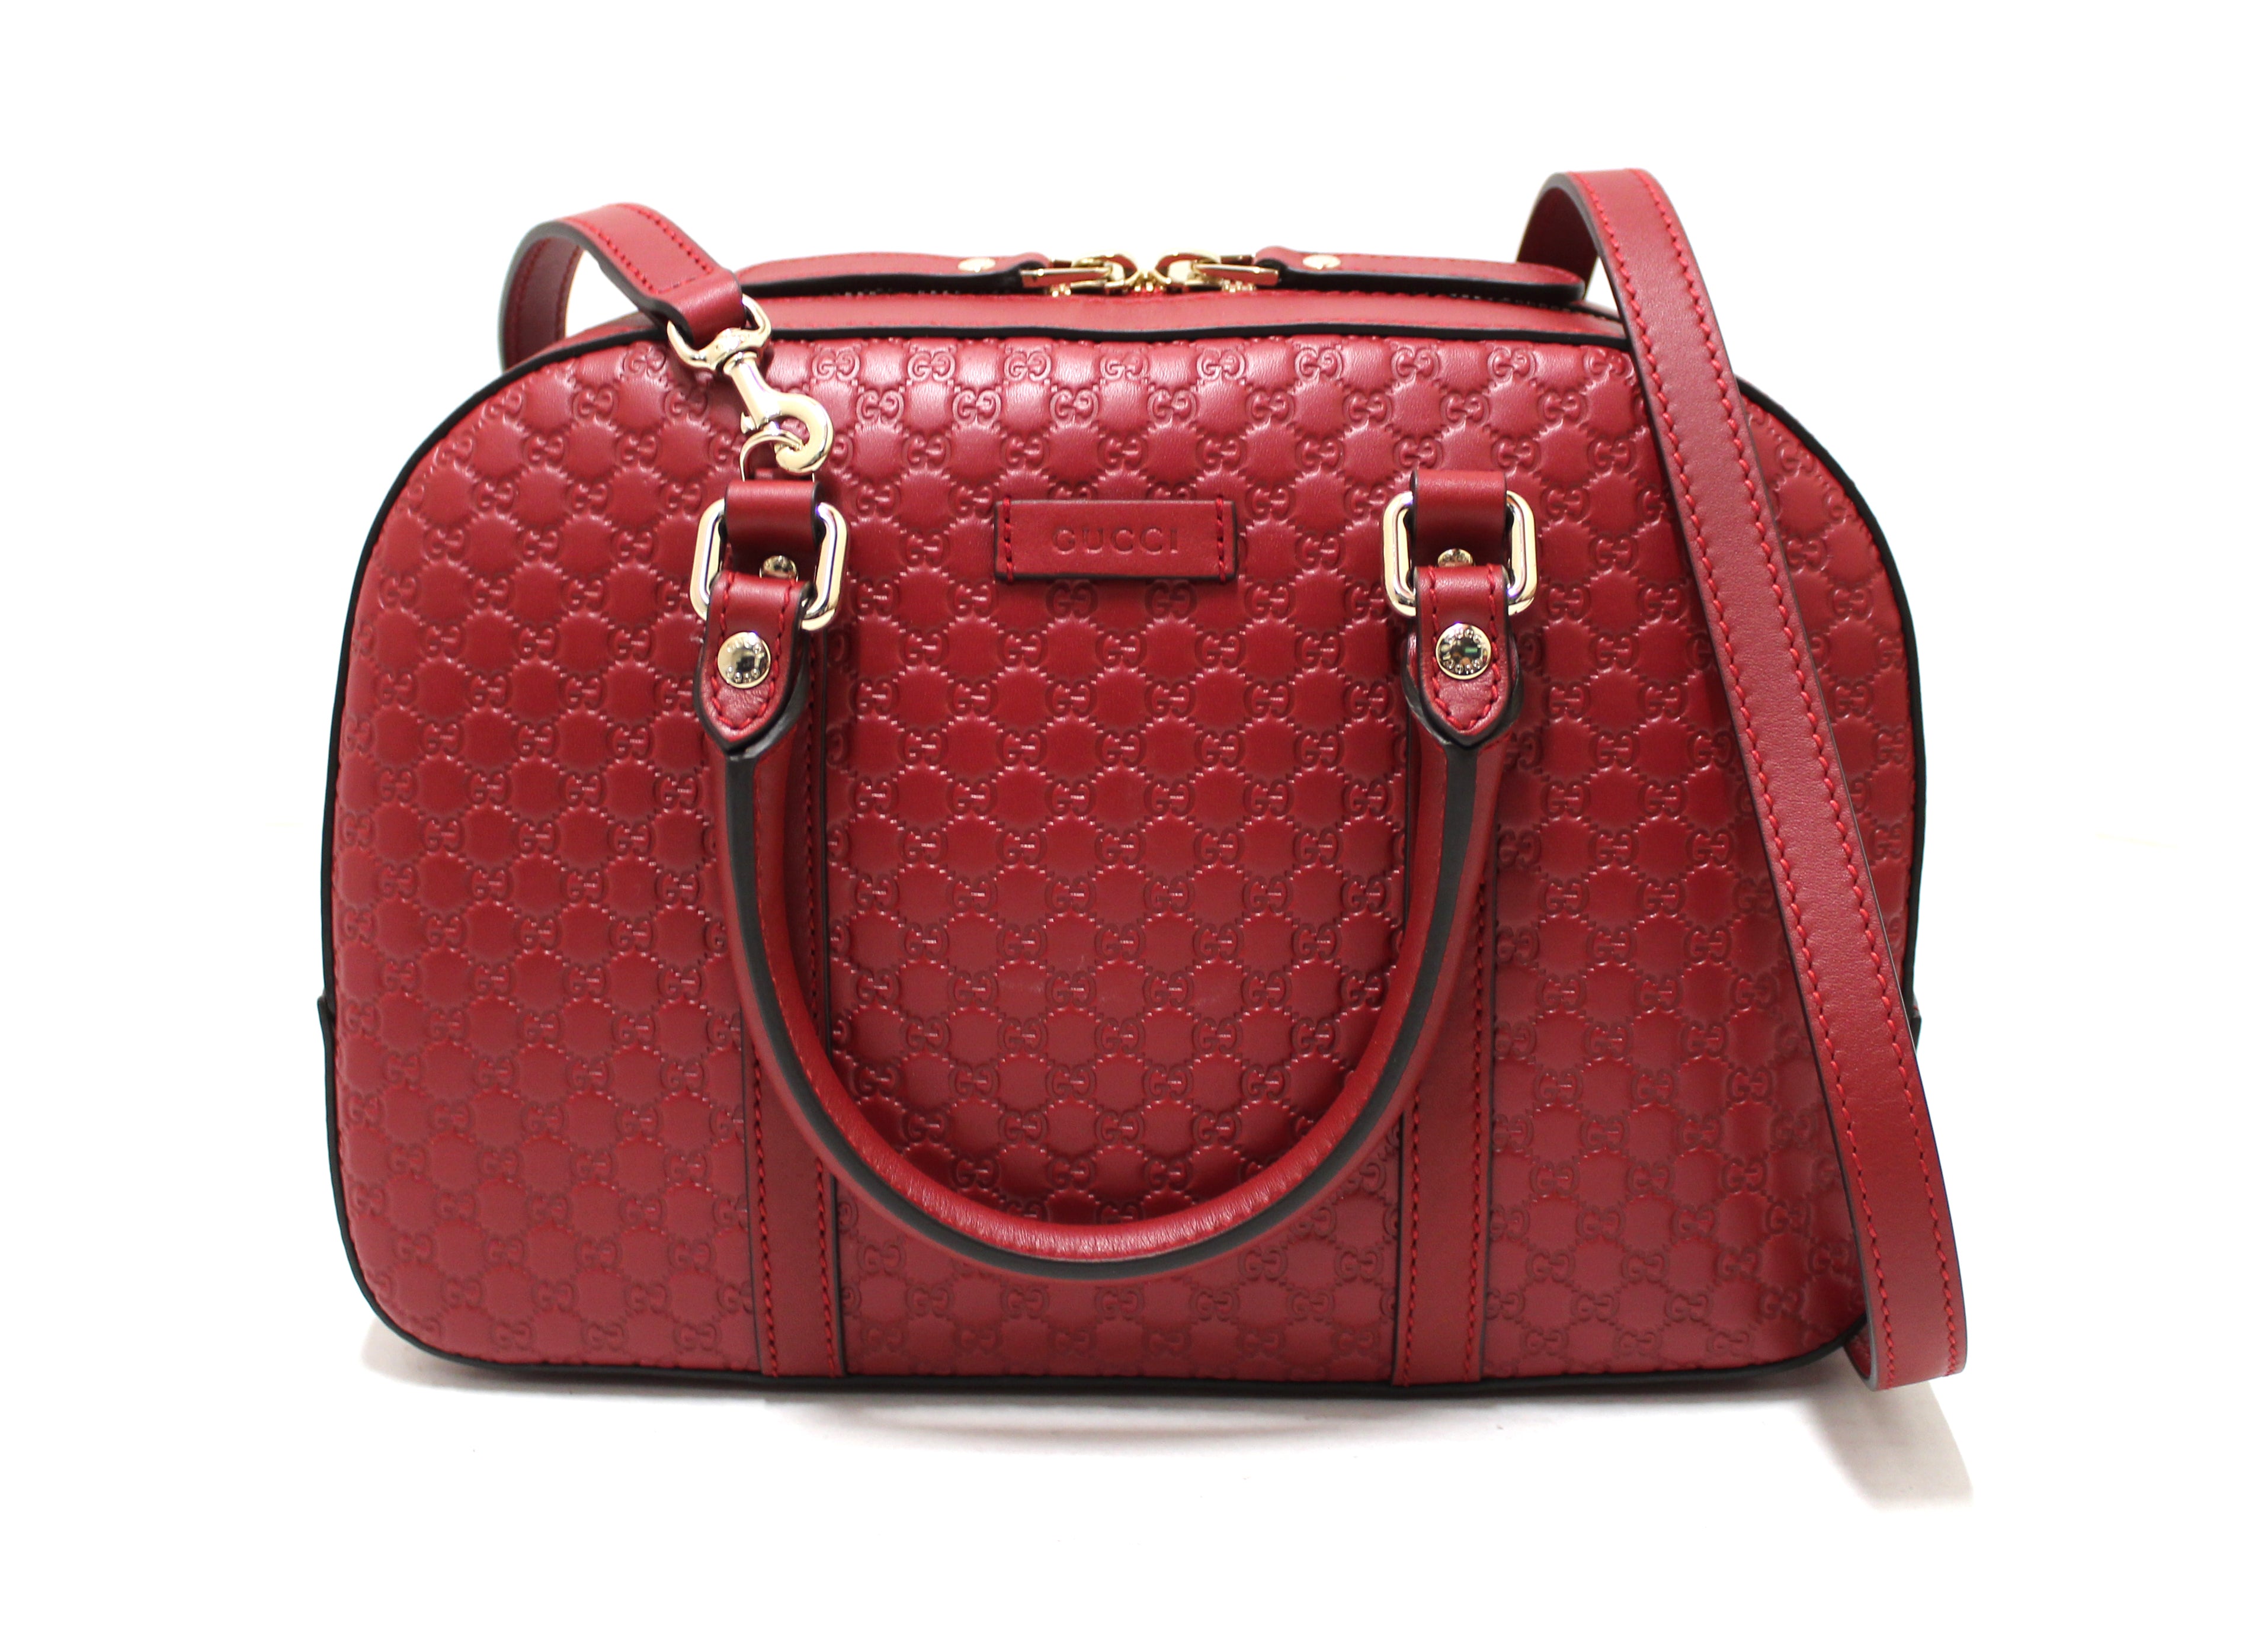 Authentic New Gucci MicroGuccissima Red Leather O Borsa Satchel Boston Bag with Strap 510286